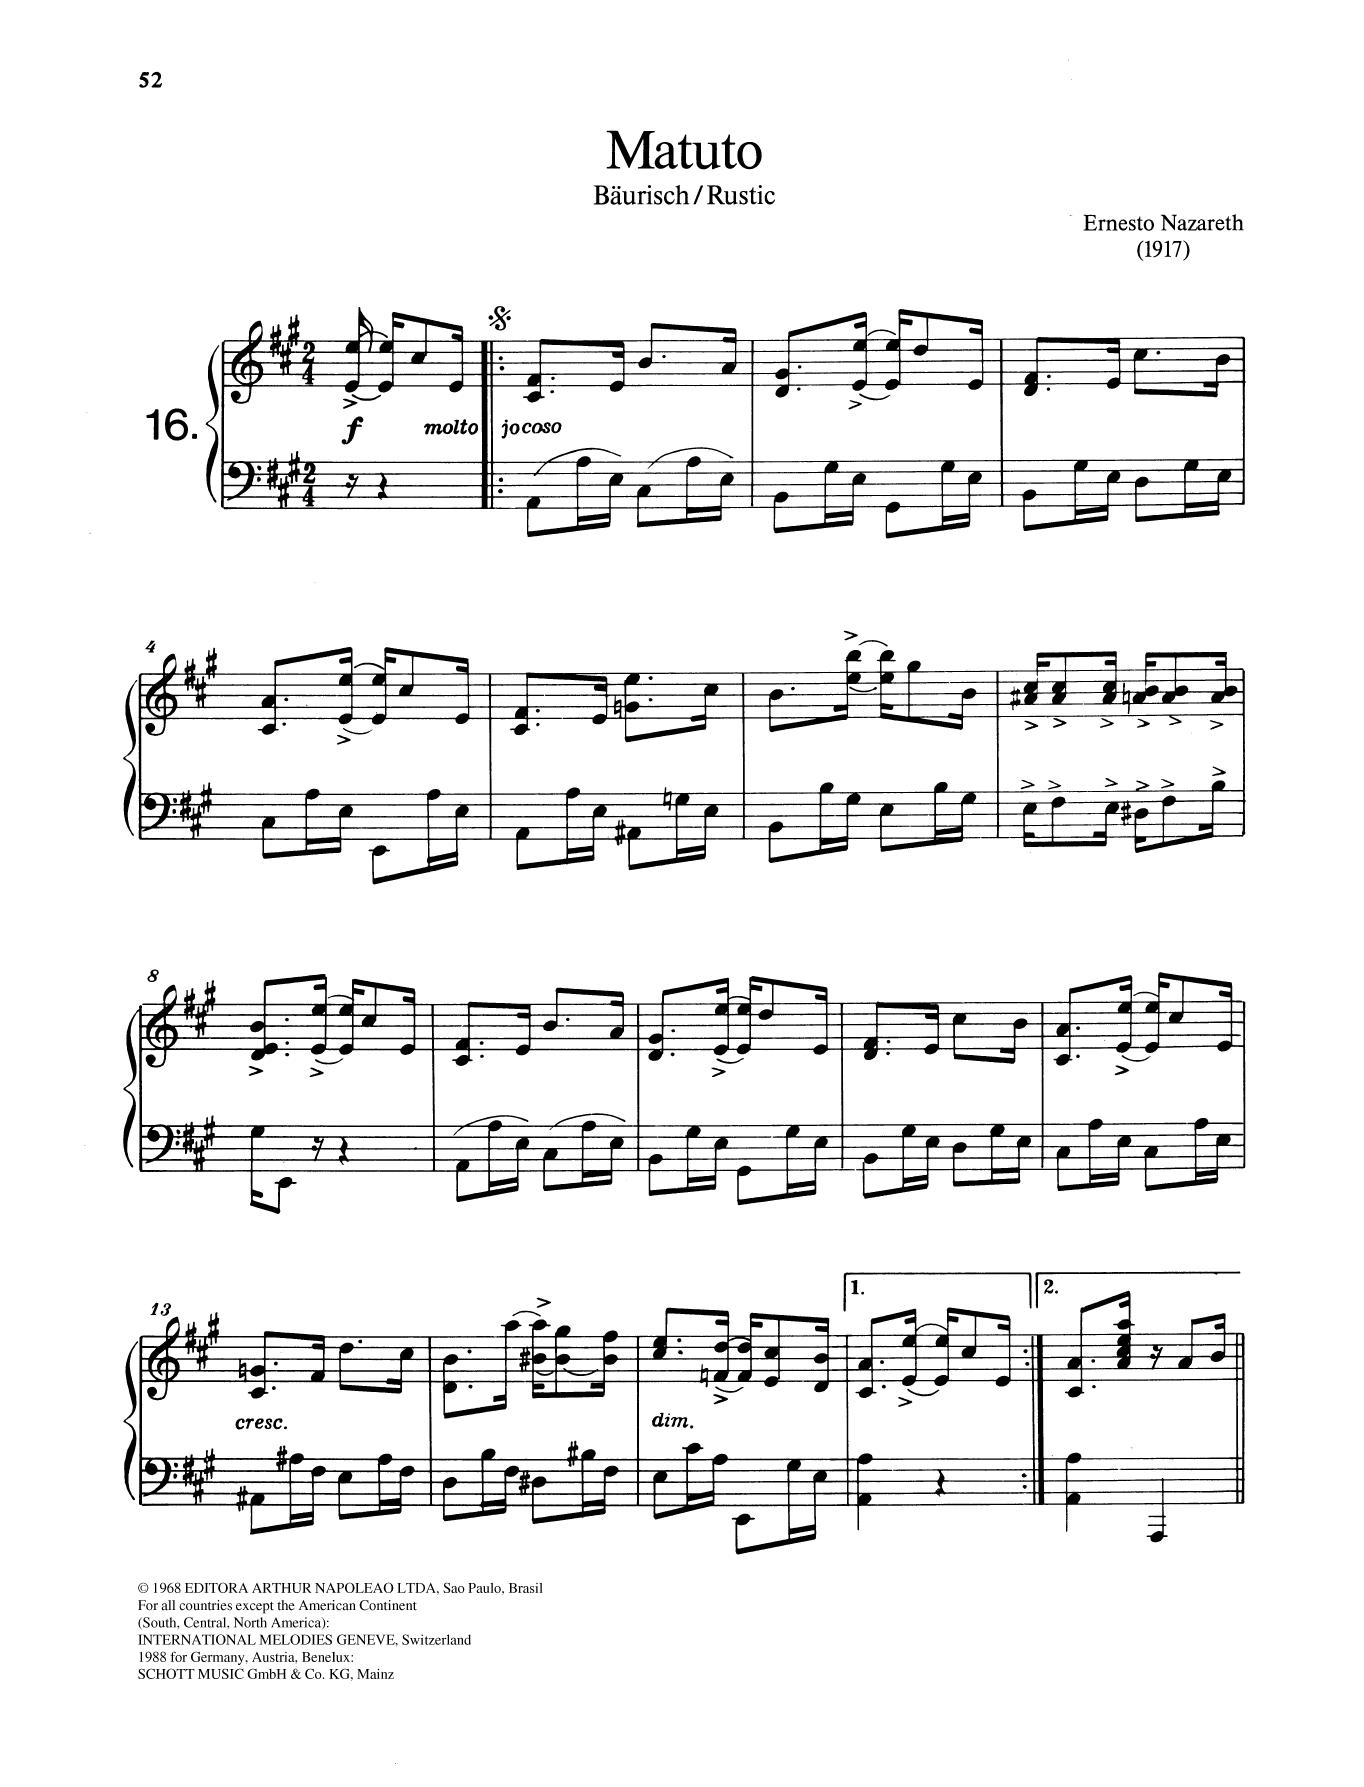 Ernesto Nazareth Matuto Sheet Music Notes & Chords for Piano Solo - Download or Print PDF